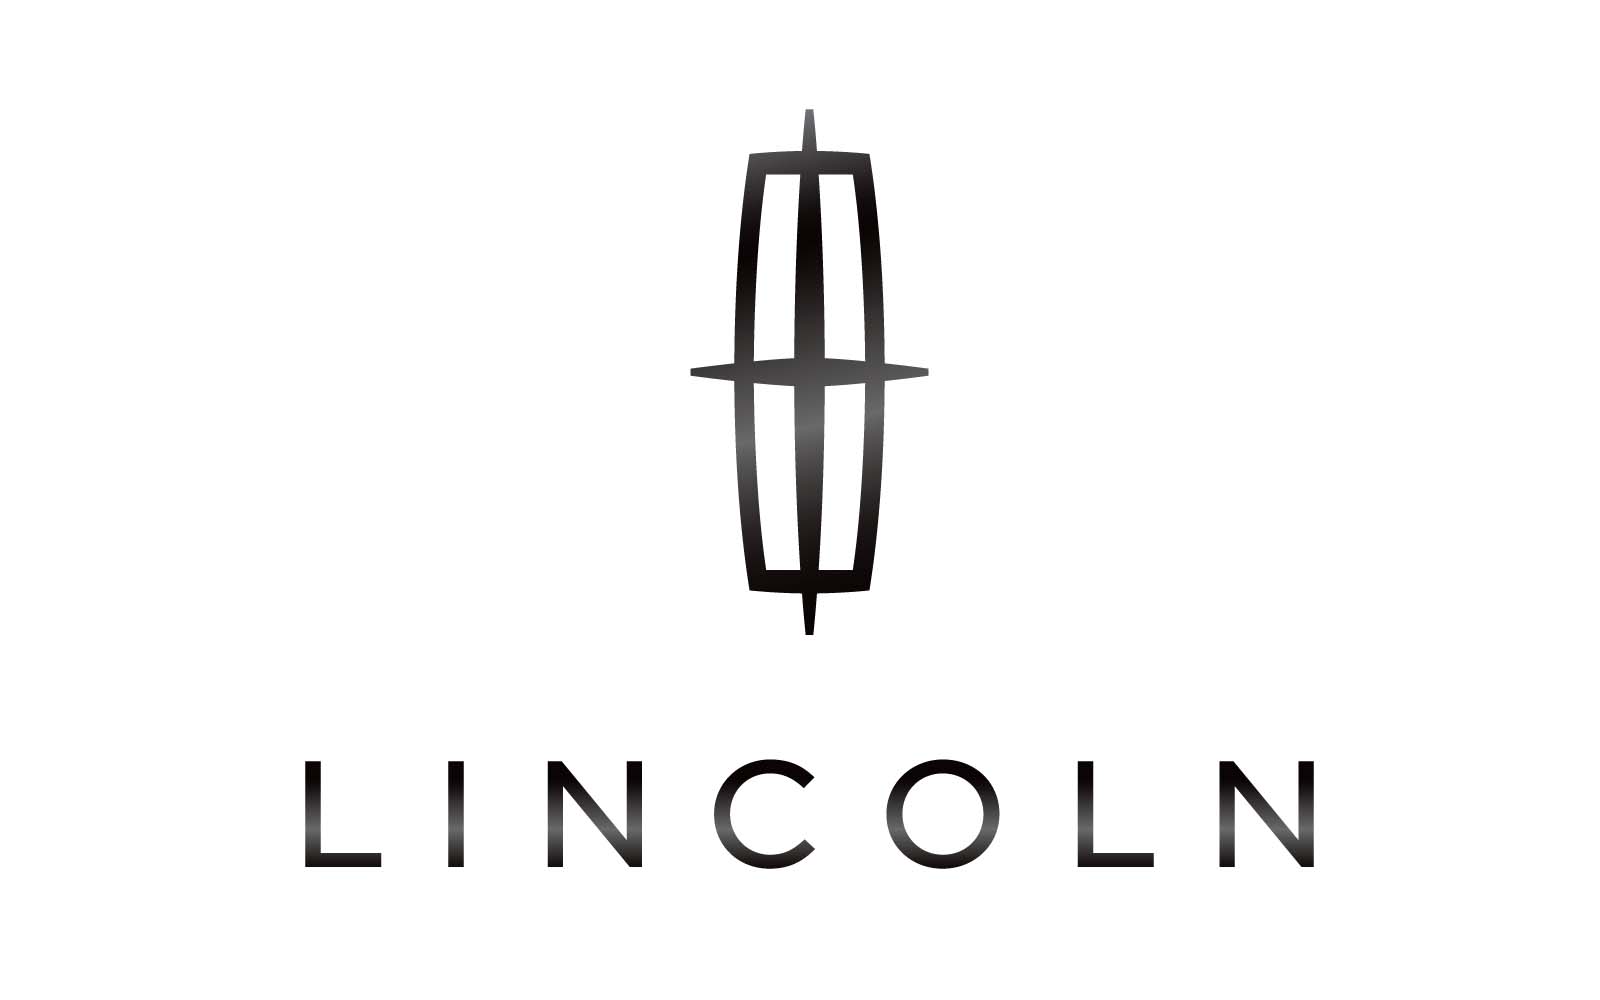 ... wallpaper,lincoln logo meaning,lincoln logo car,lincoln logo license